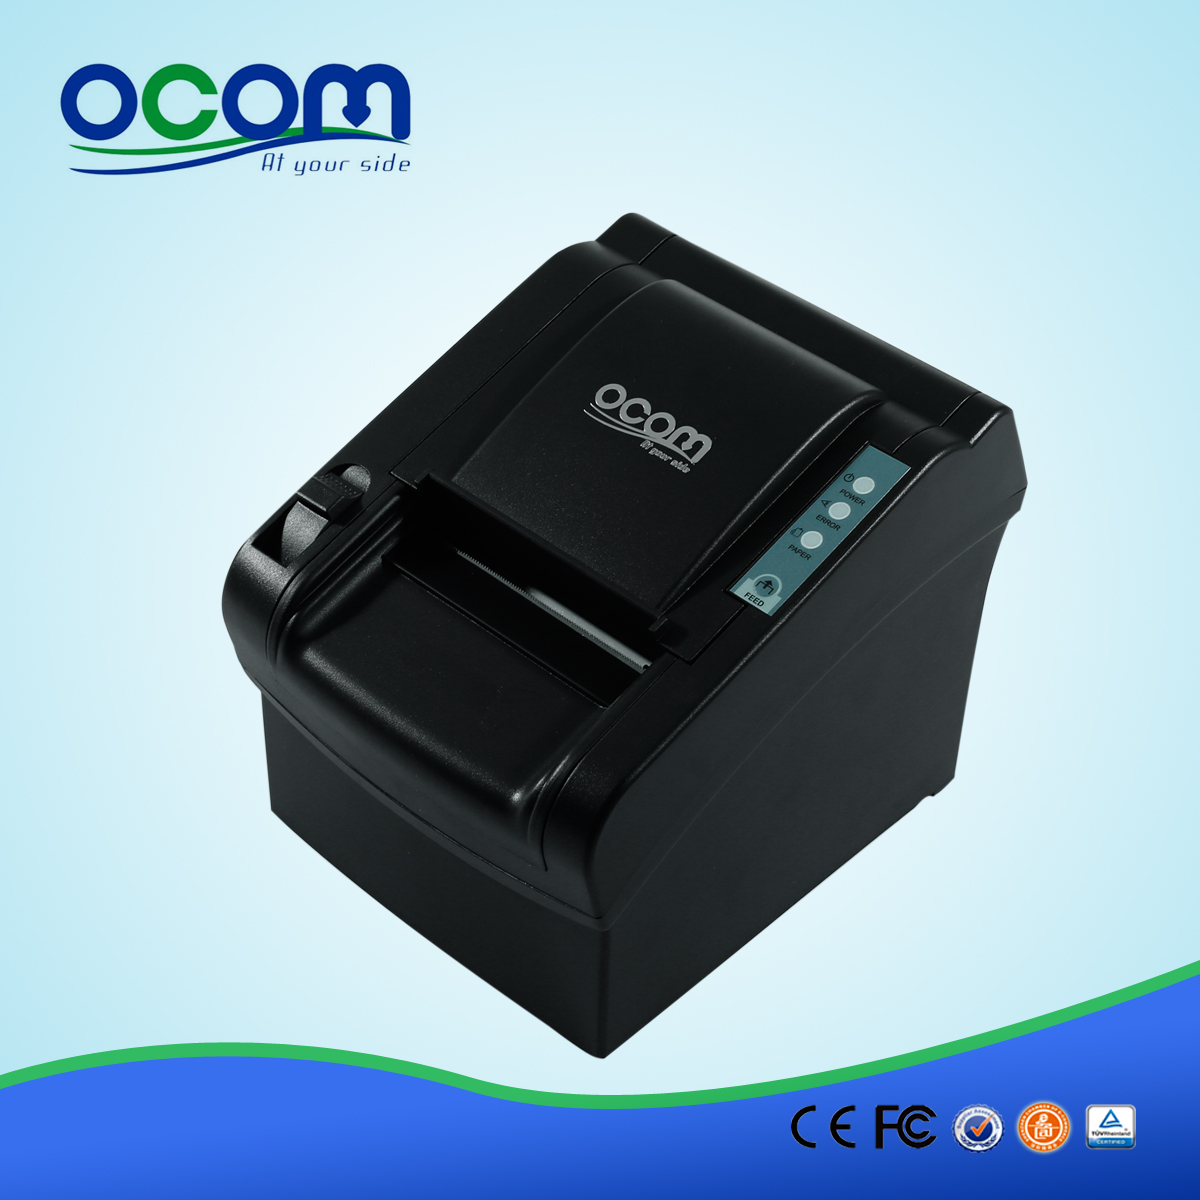 OCPP-802: Fuente de módulo de impresora térmica barata, el precio de la impresora térmica en la India